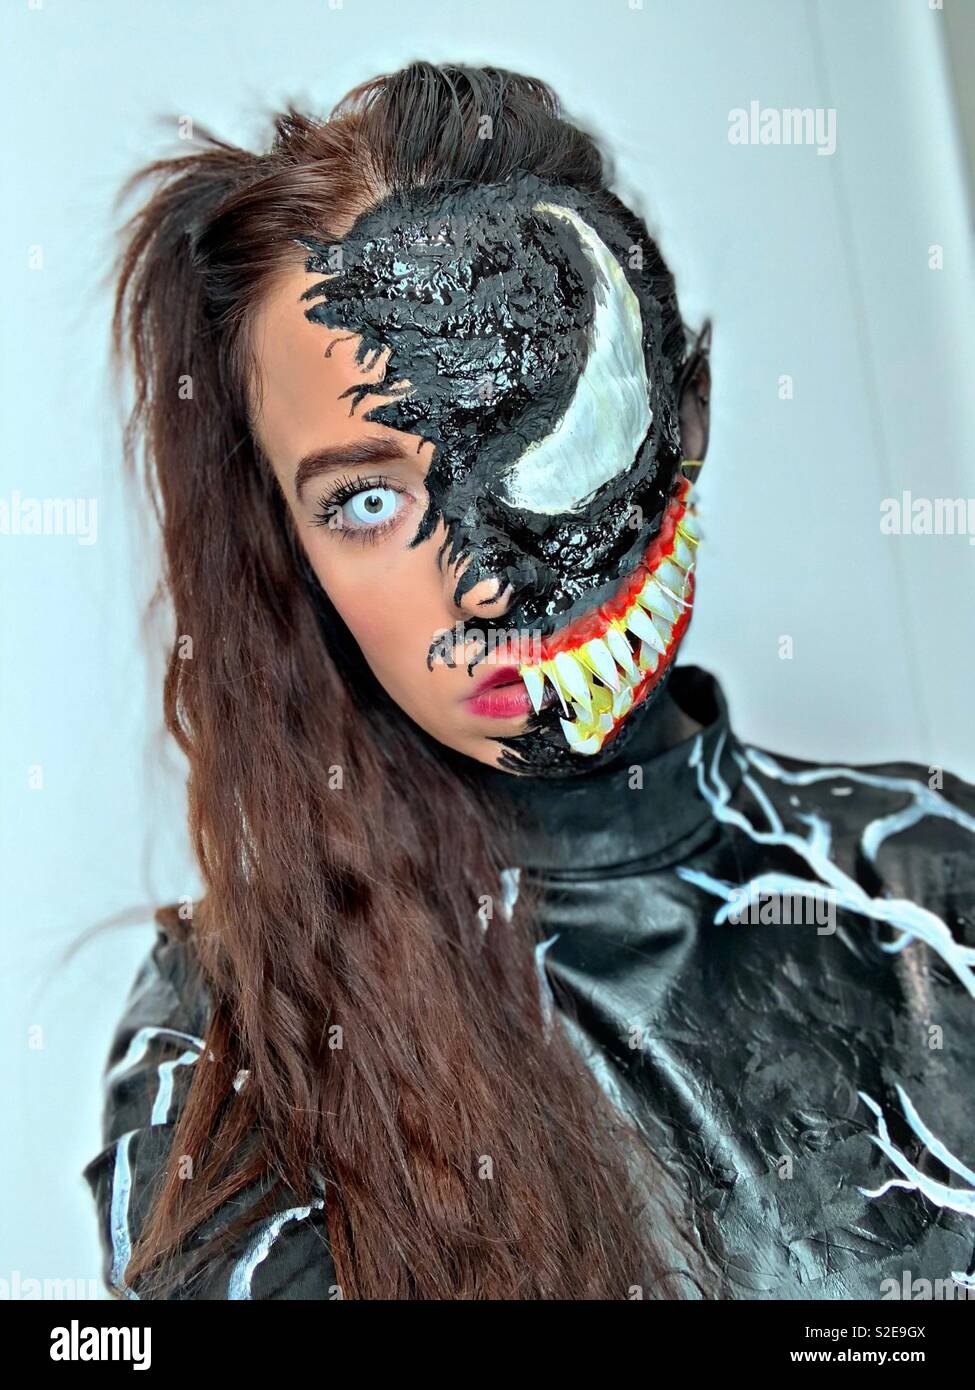 Venom Halloween make up using Snazaroo face paints and liquid latex. Teeth  made with false nails Stock Photo - Alamy